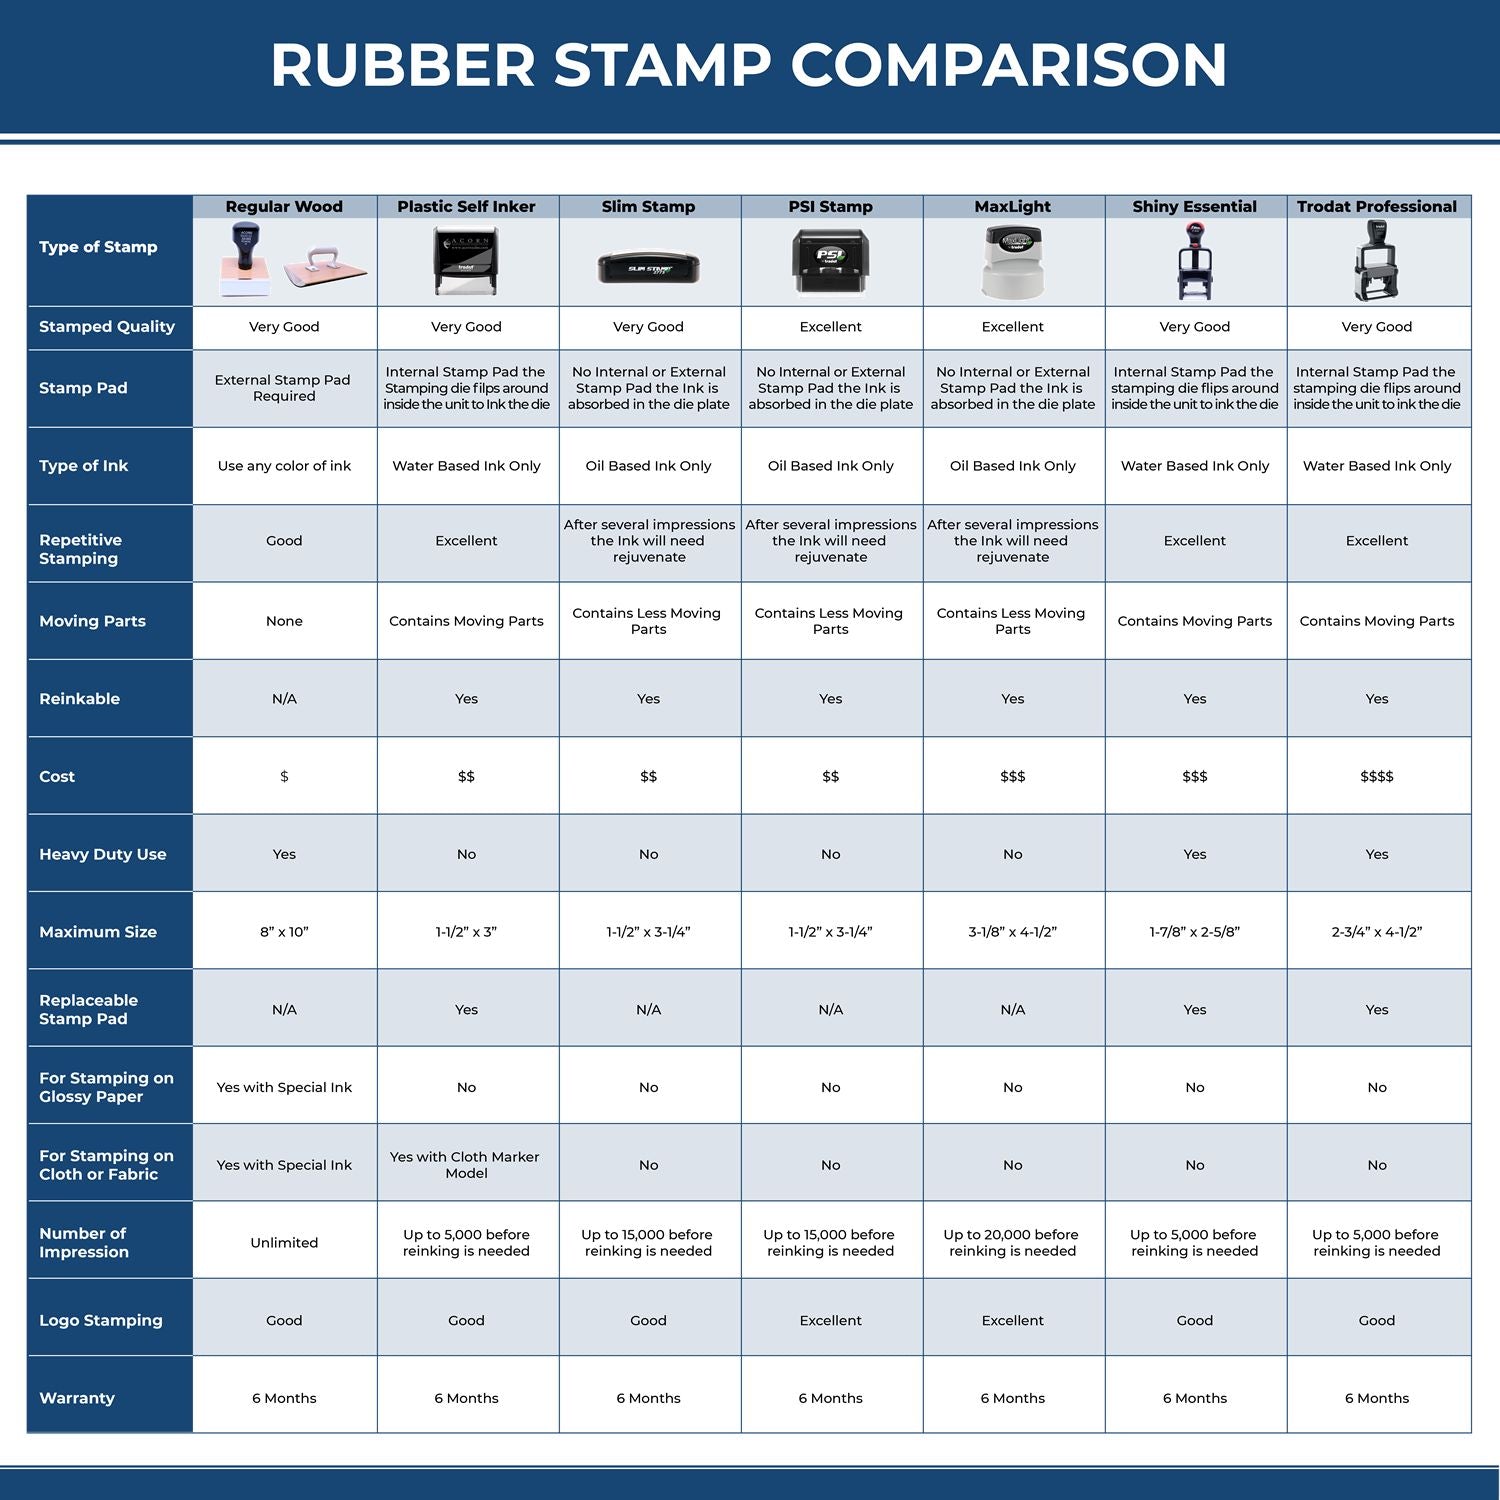 Large Pre-Inked Medical Personnel Only Stamp 5503SLIM Rubber Stamp Comparison